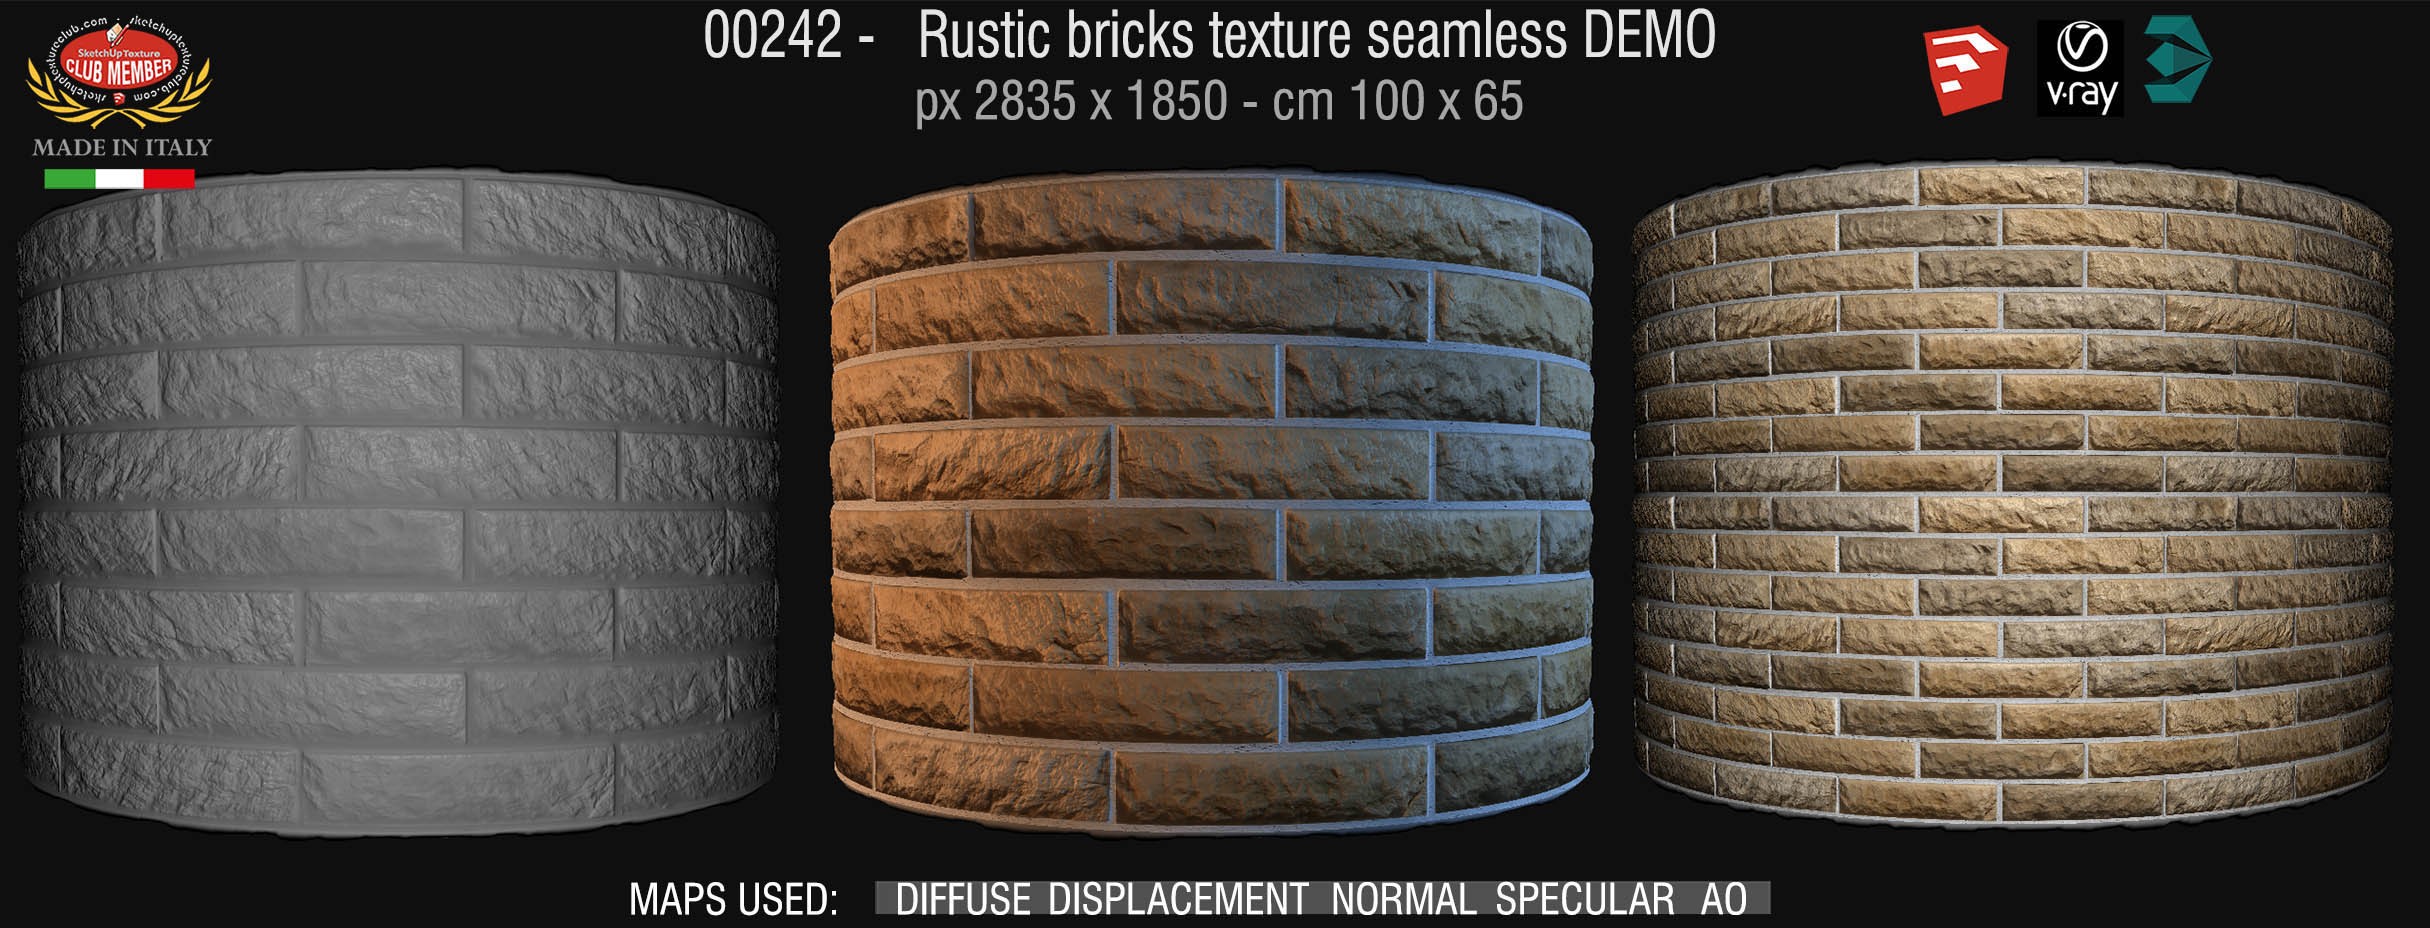 00242 Rustic bricks texture seamless + maps DEMO